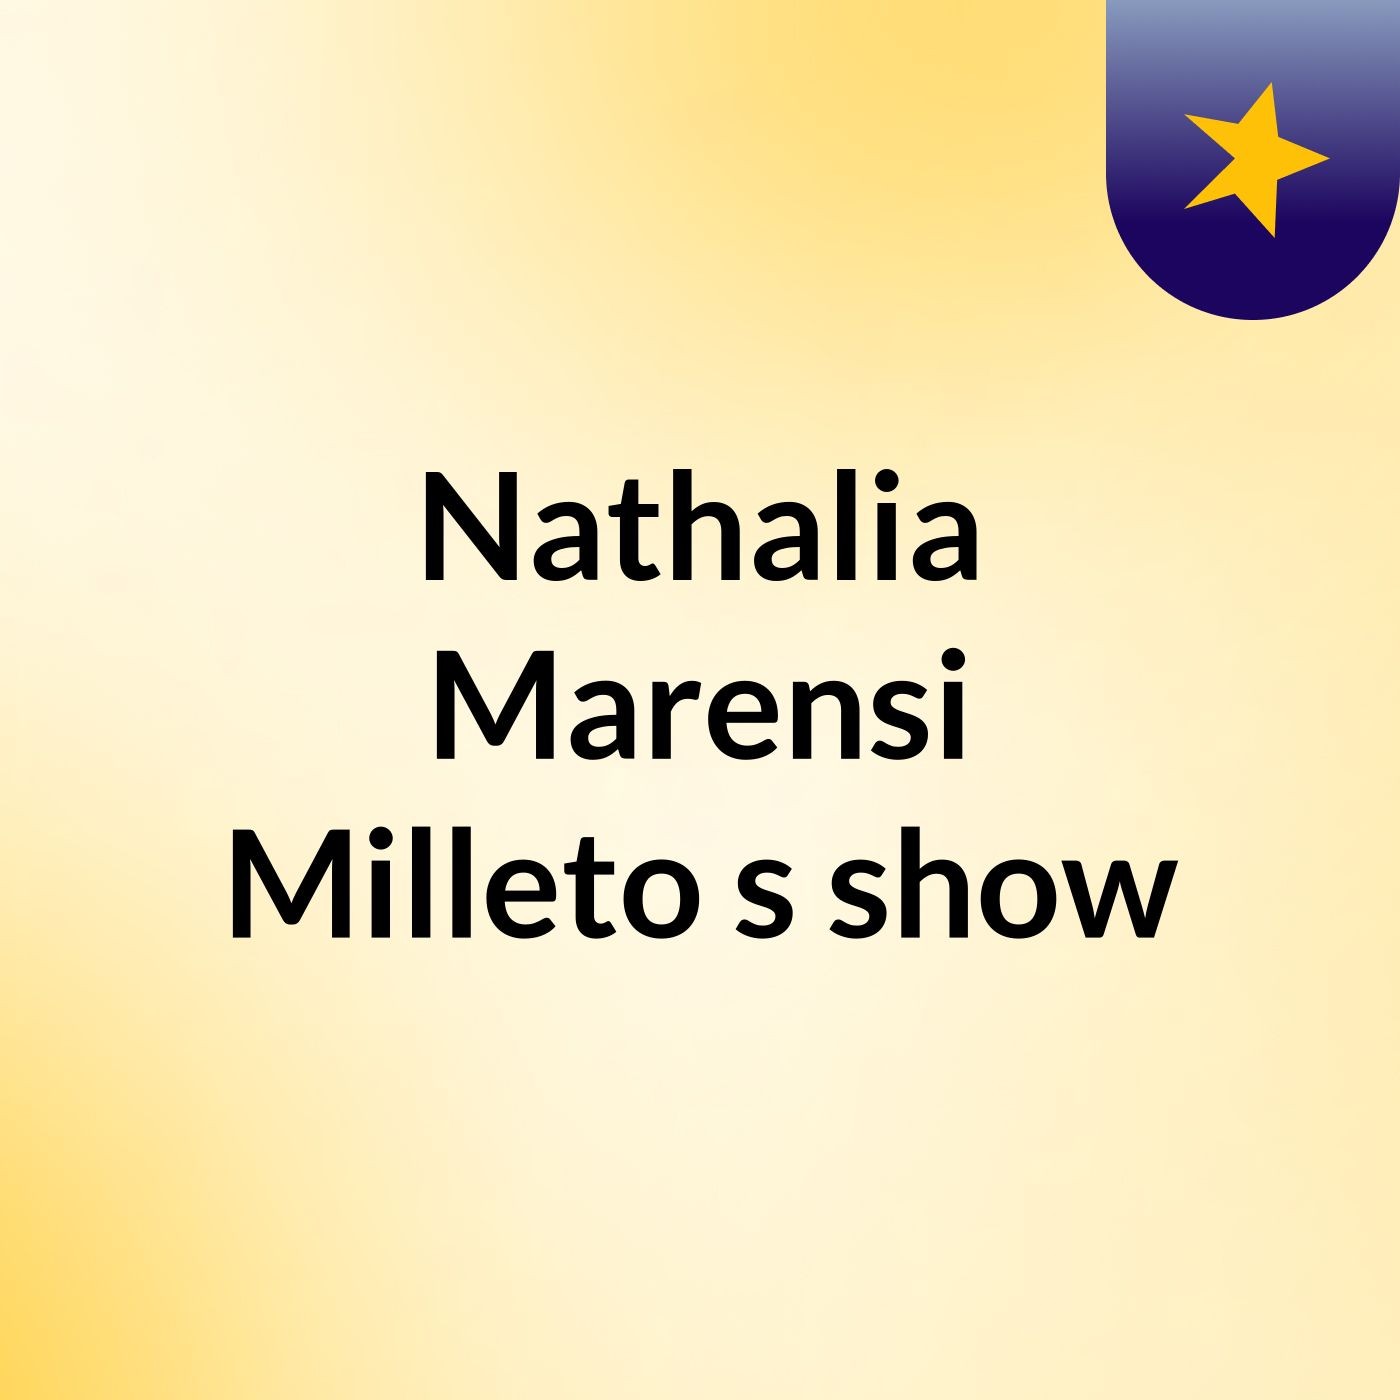 Nathalia Marensi Milleto's show